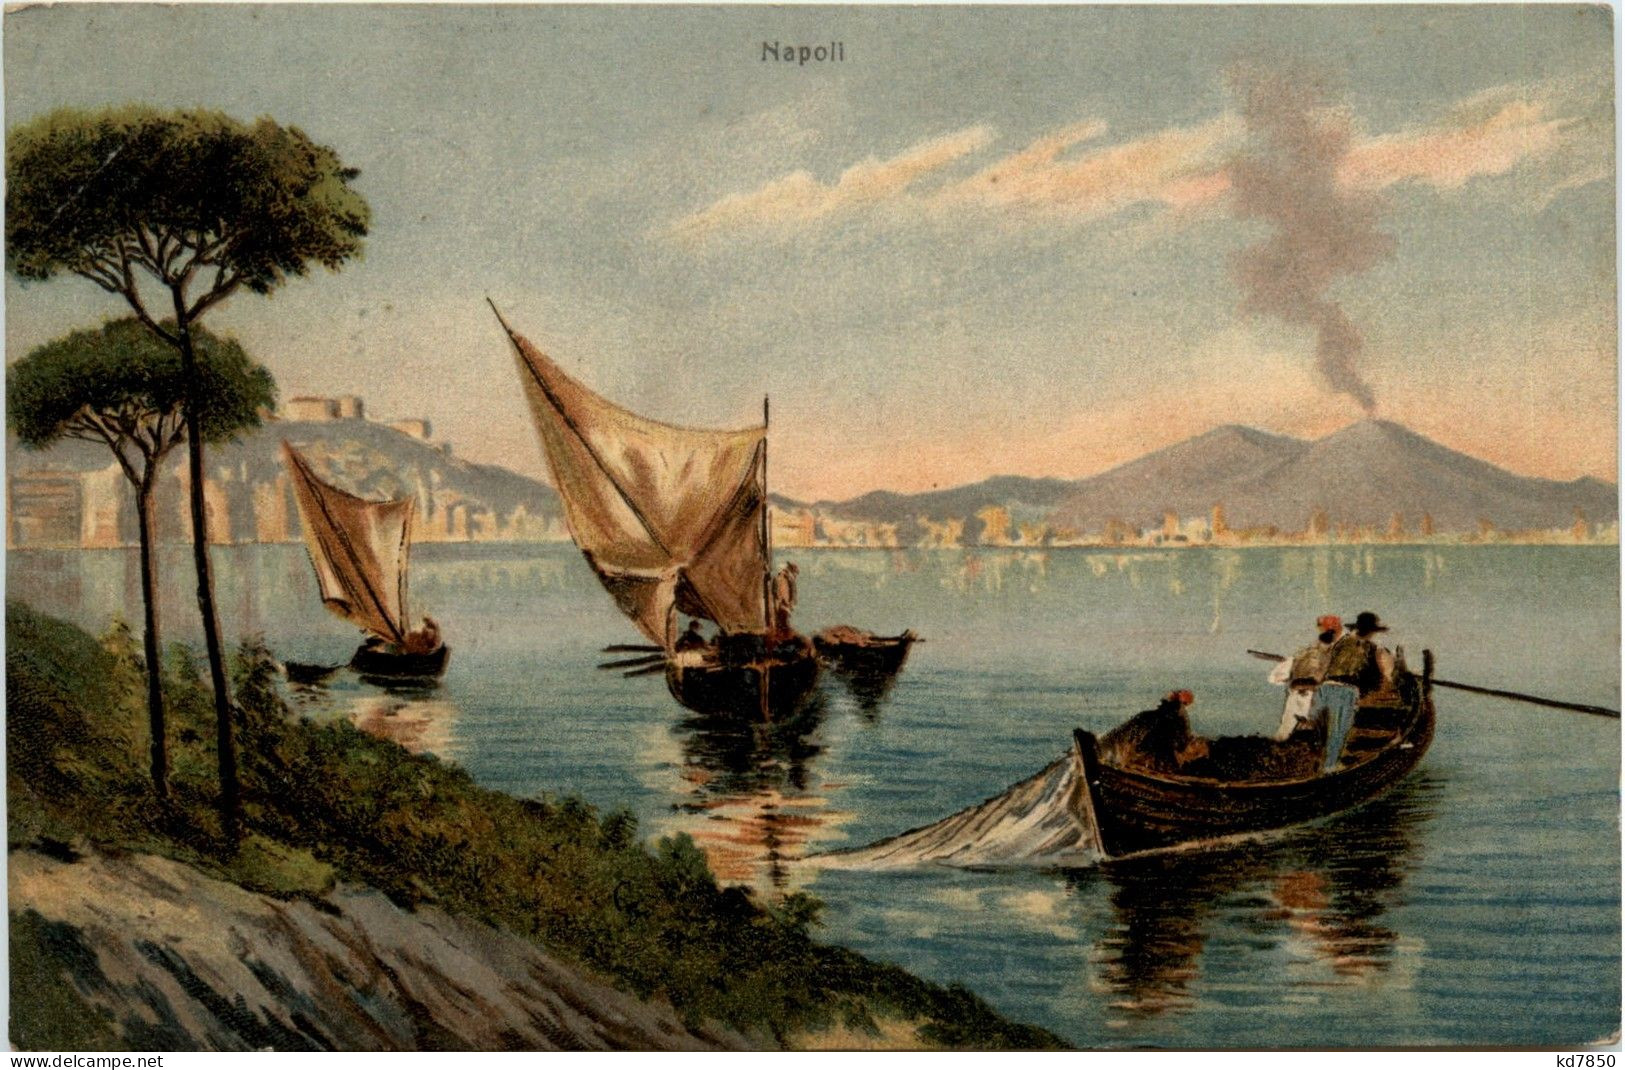 Napoli - Napoli